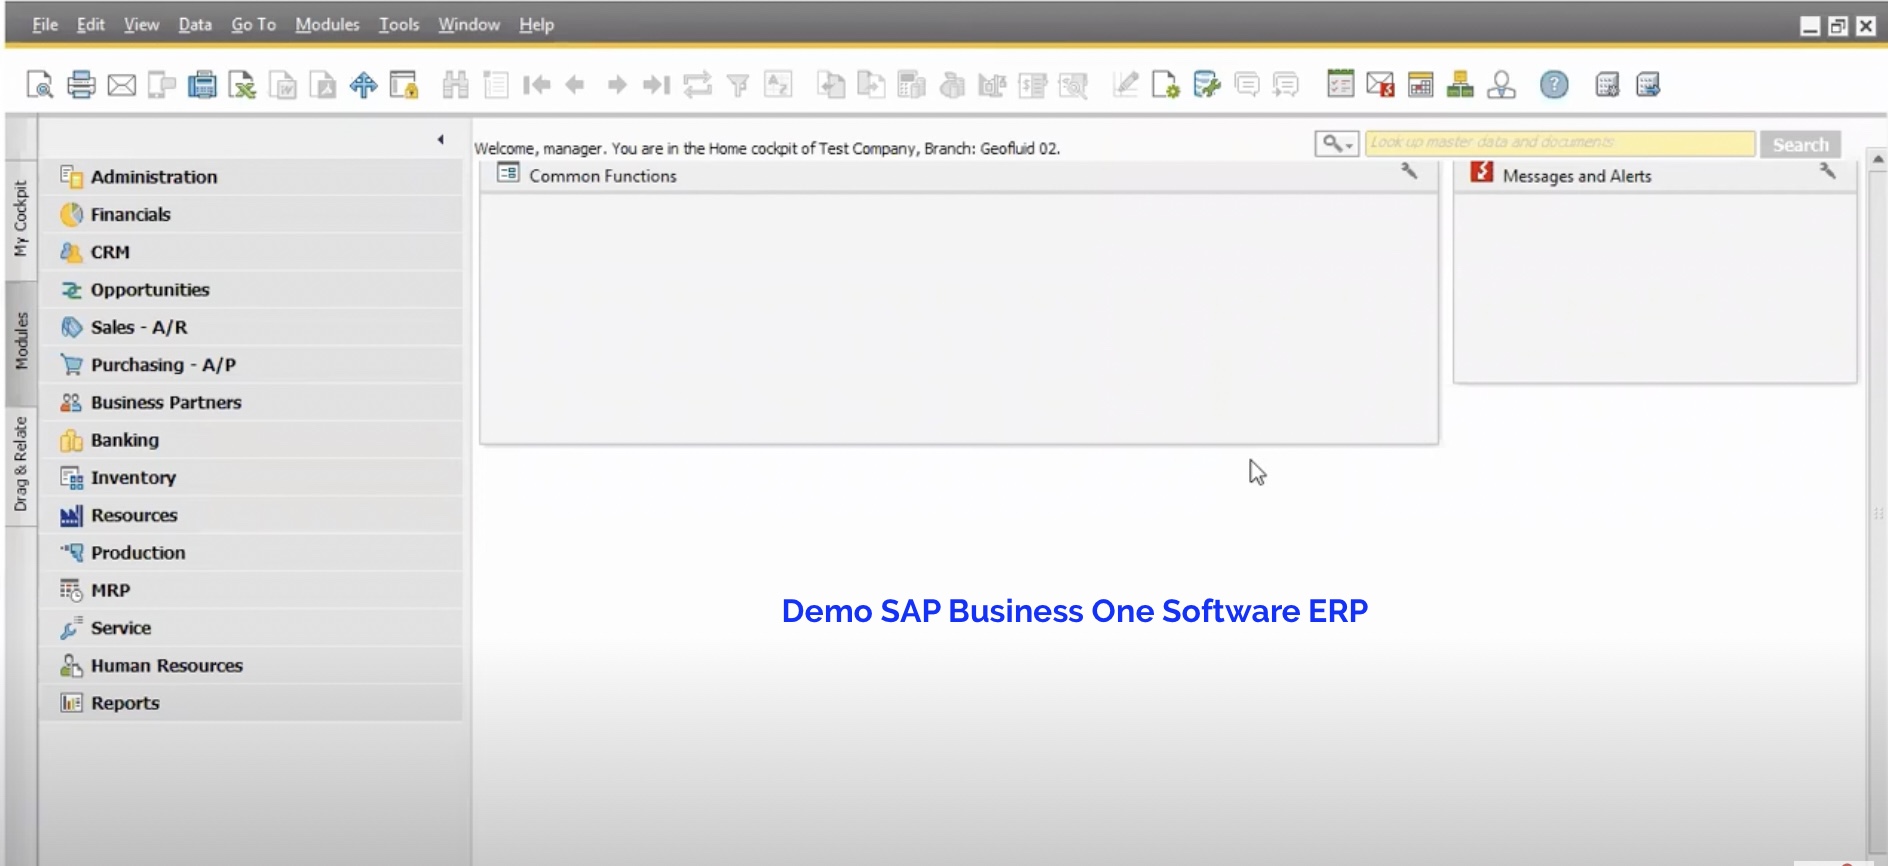 Demo SAP Business One Software ERP